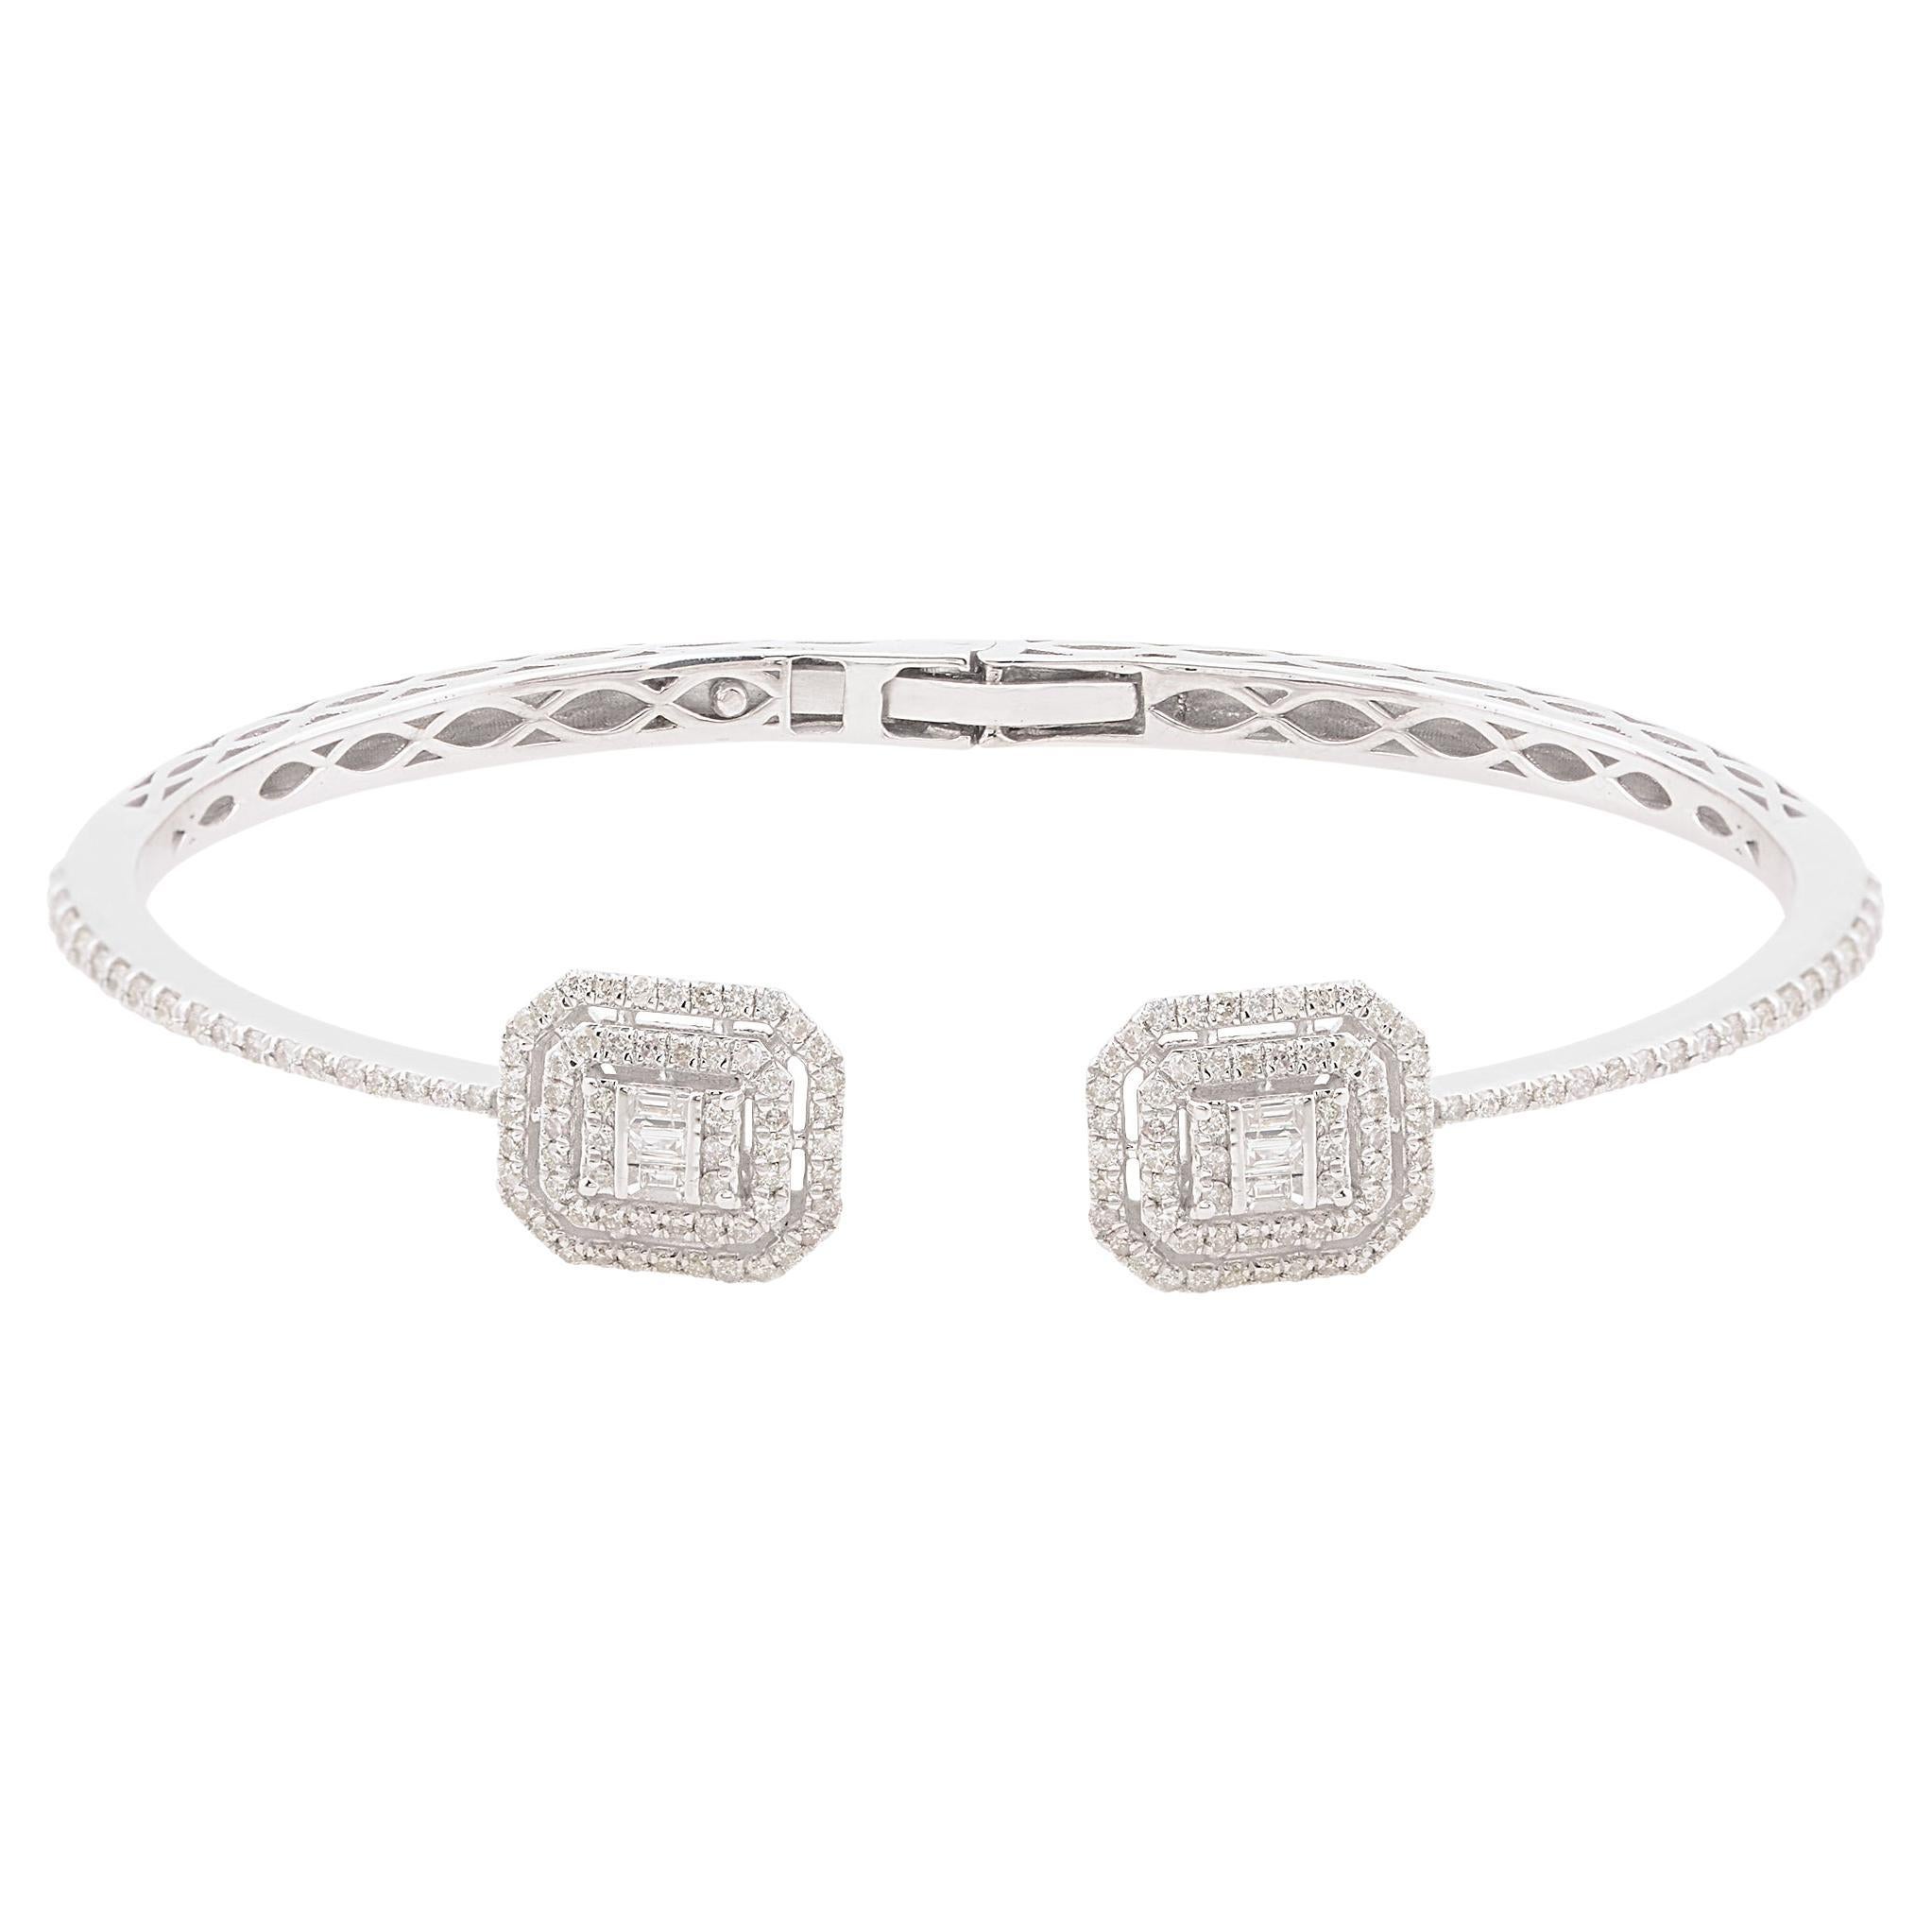 1.20 Carat Baguette Diamond Cuff Bangle Bracelet Solid 10k White Gold Jewelry